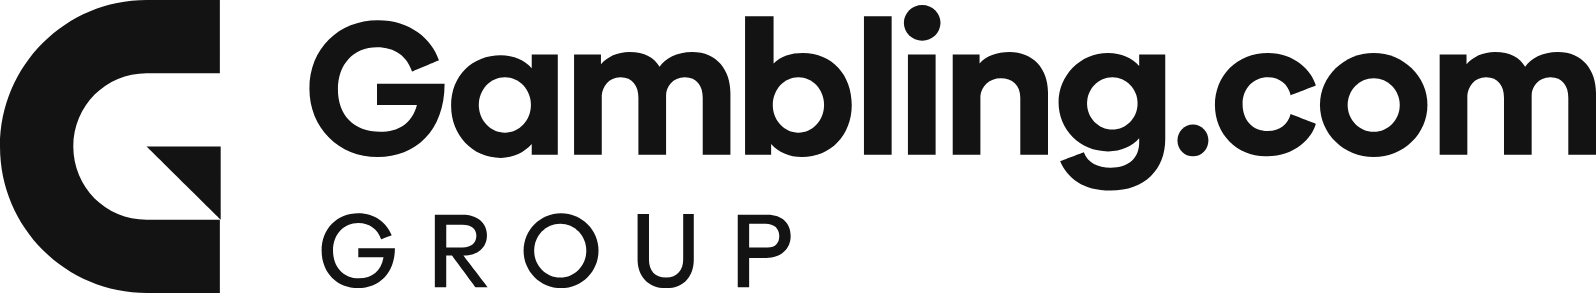 Gambling.com Group logo large (transparent PNG)